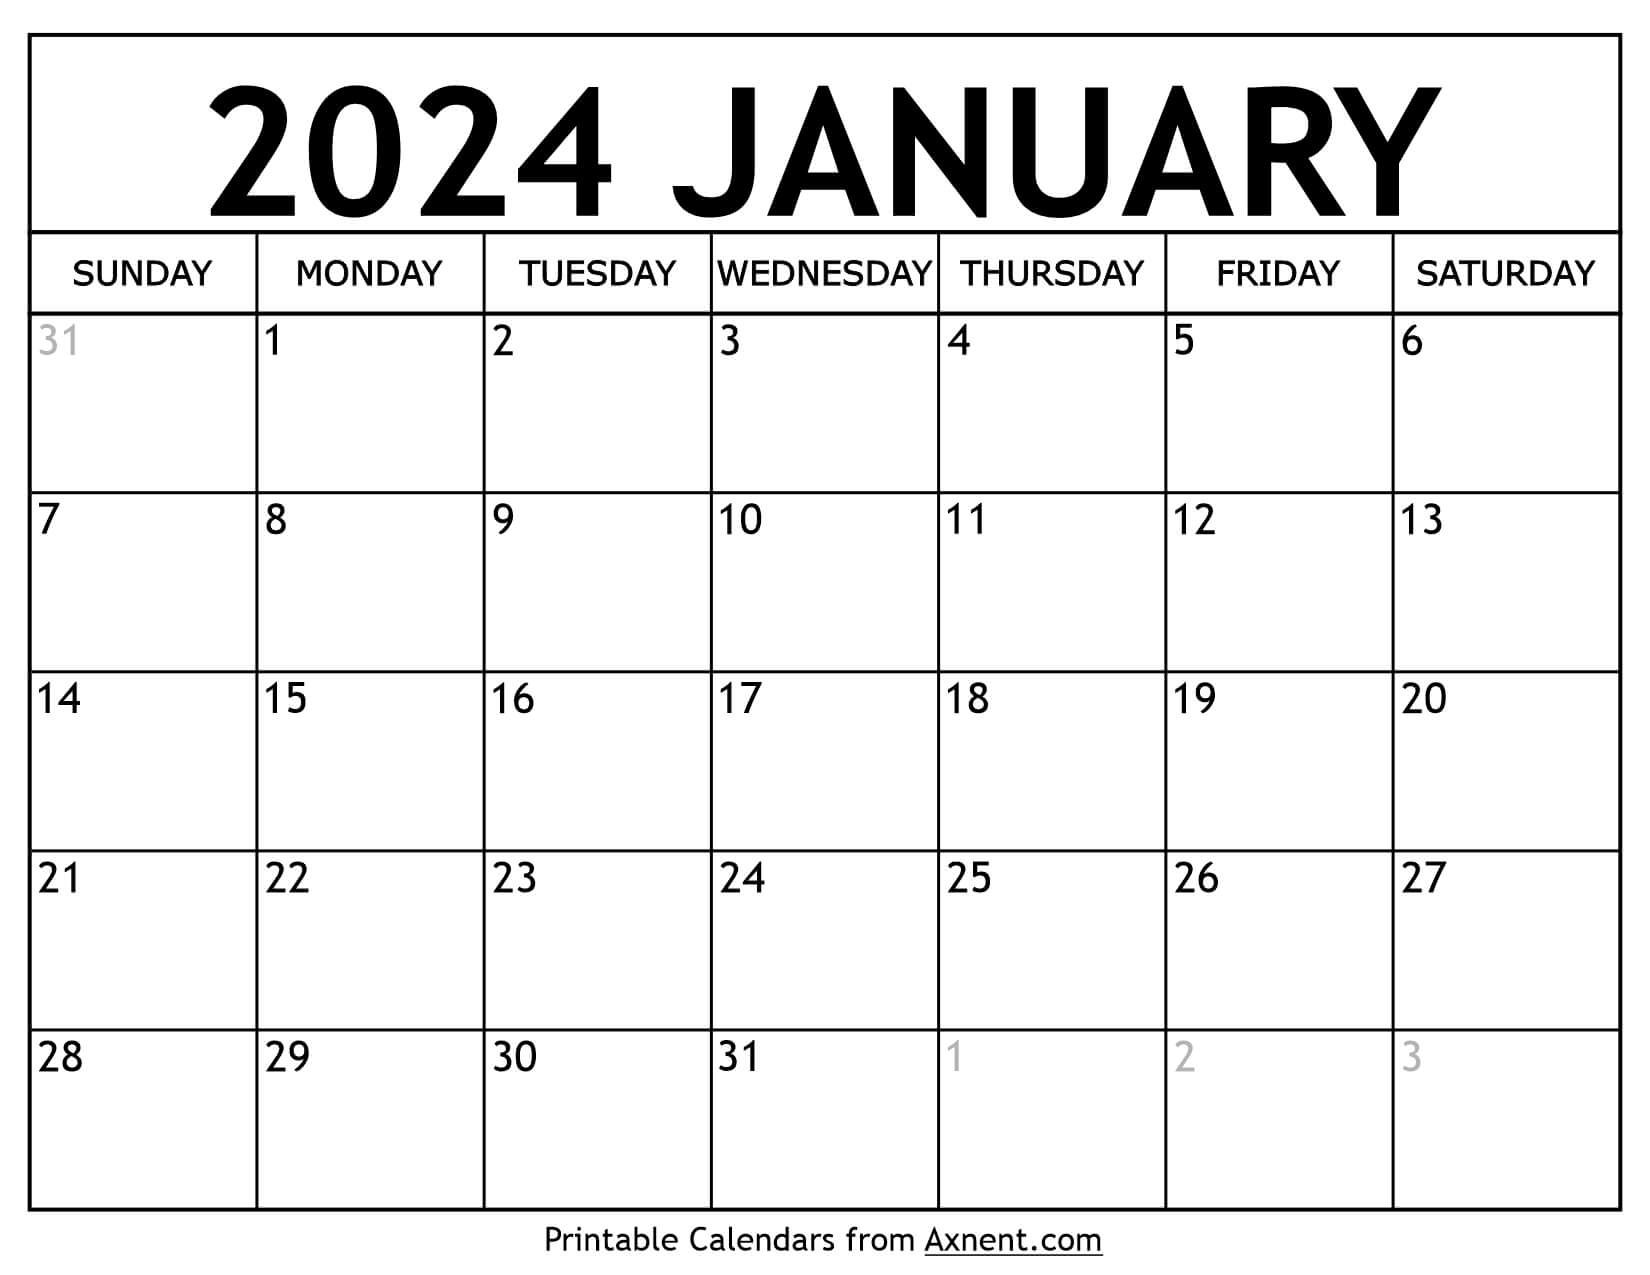 Printable January 2024 Calendar Template - Print Now for Jan 2024 Printable Calendar Free